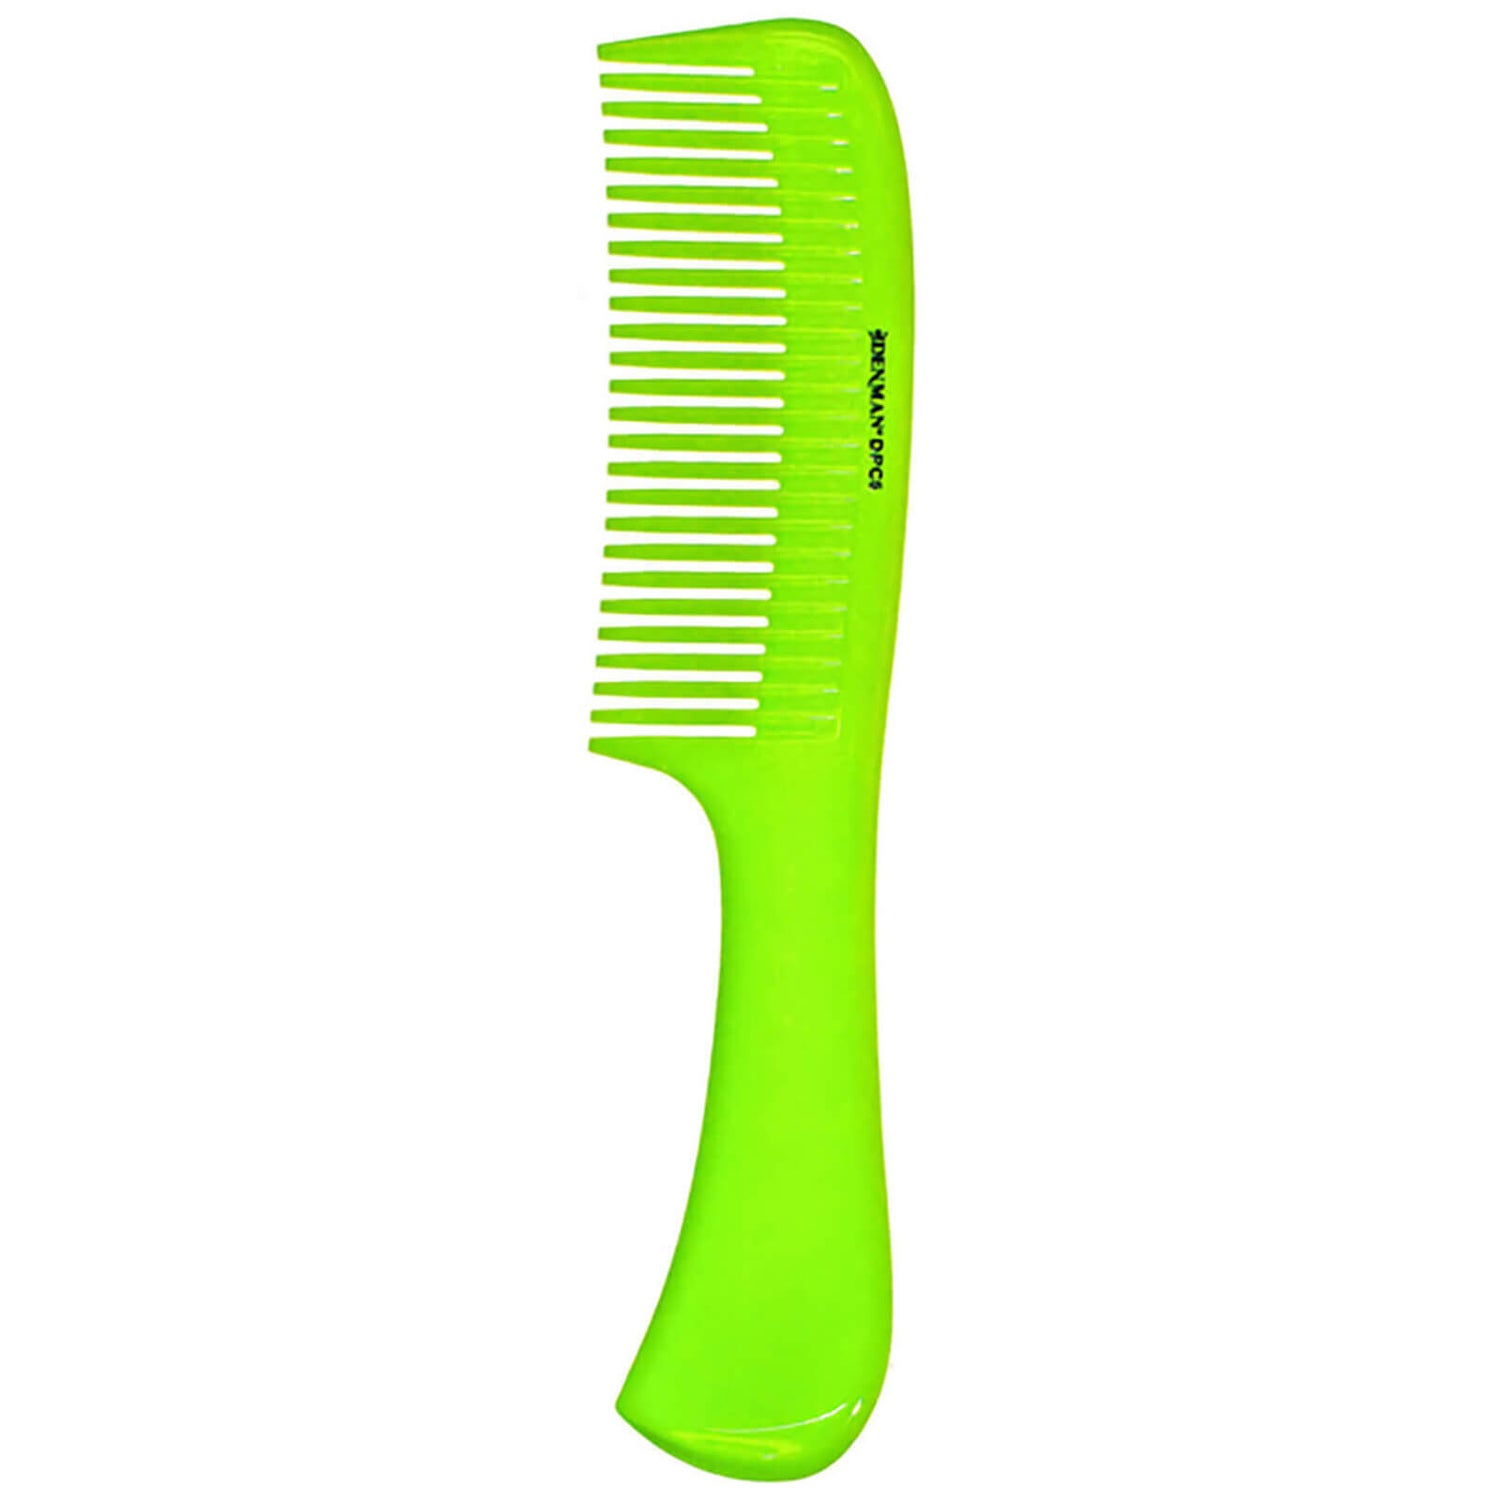 Denman Precision Rake Comb - Lime Green